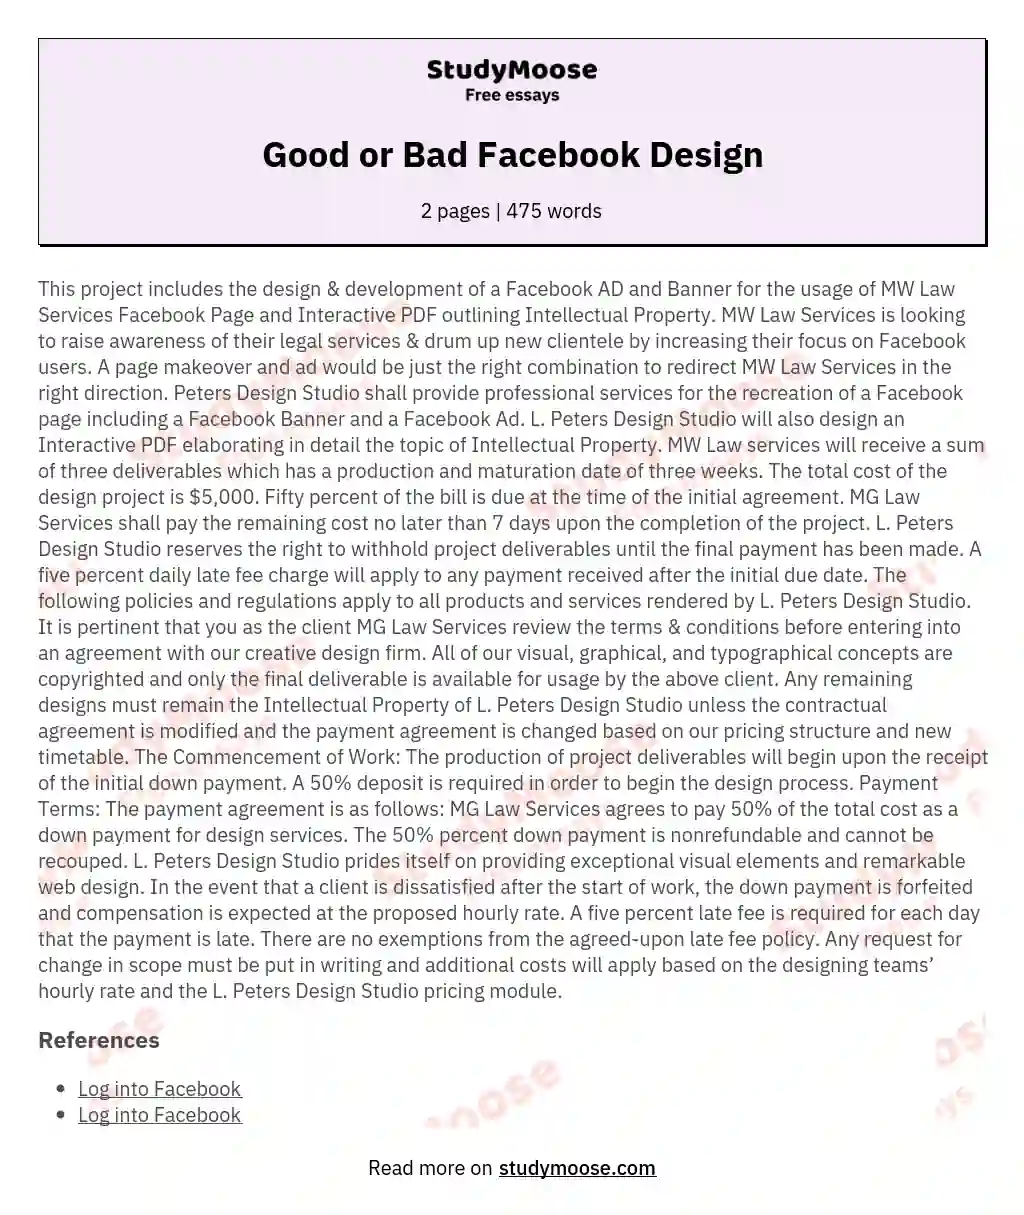 Good or Bad Facebook Design essay